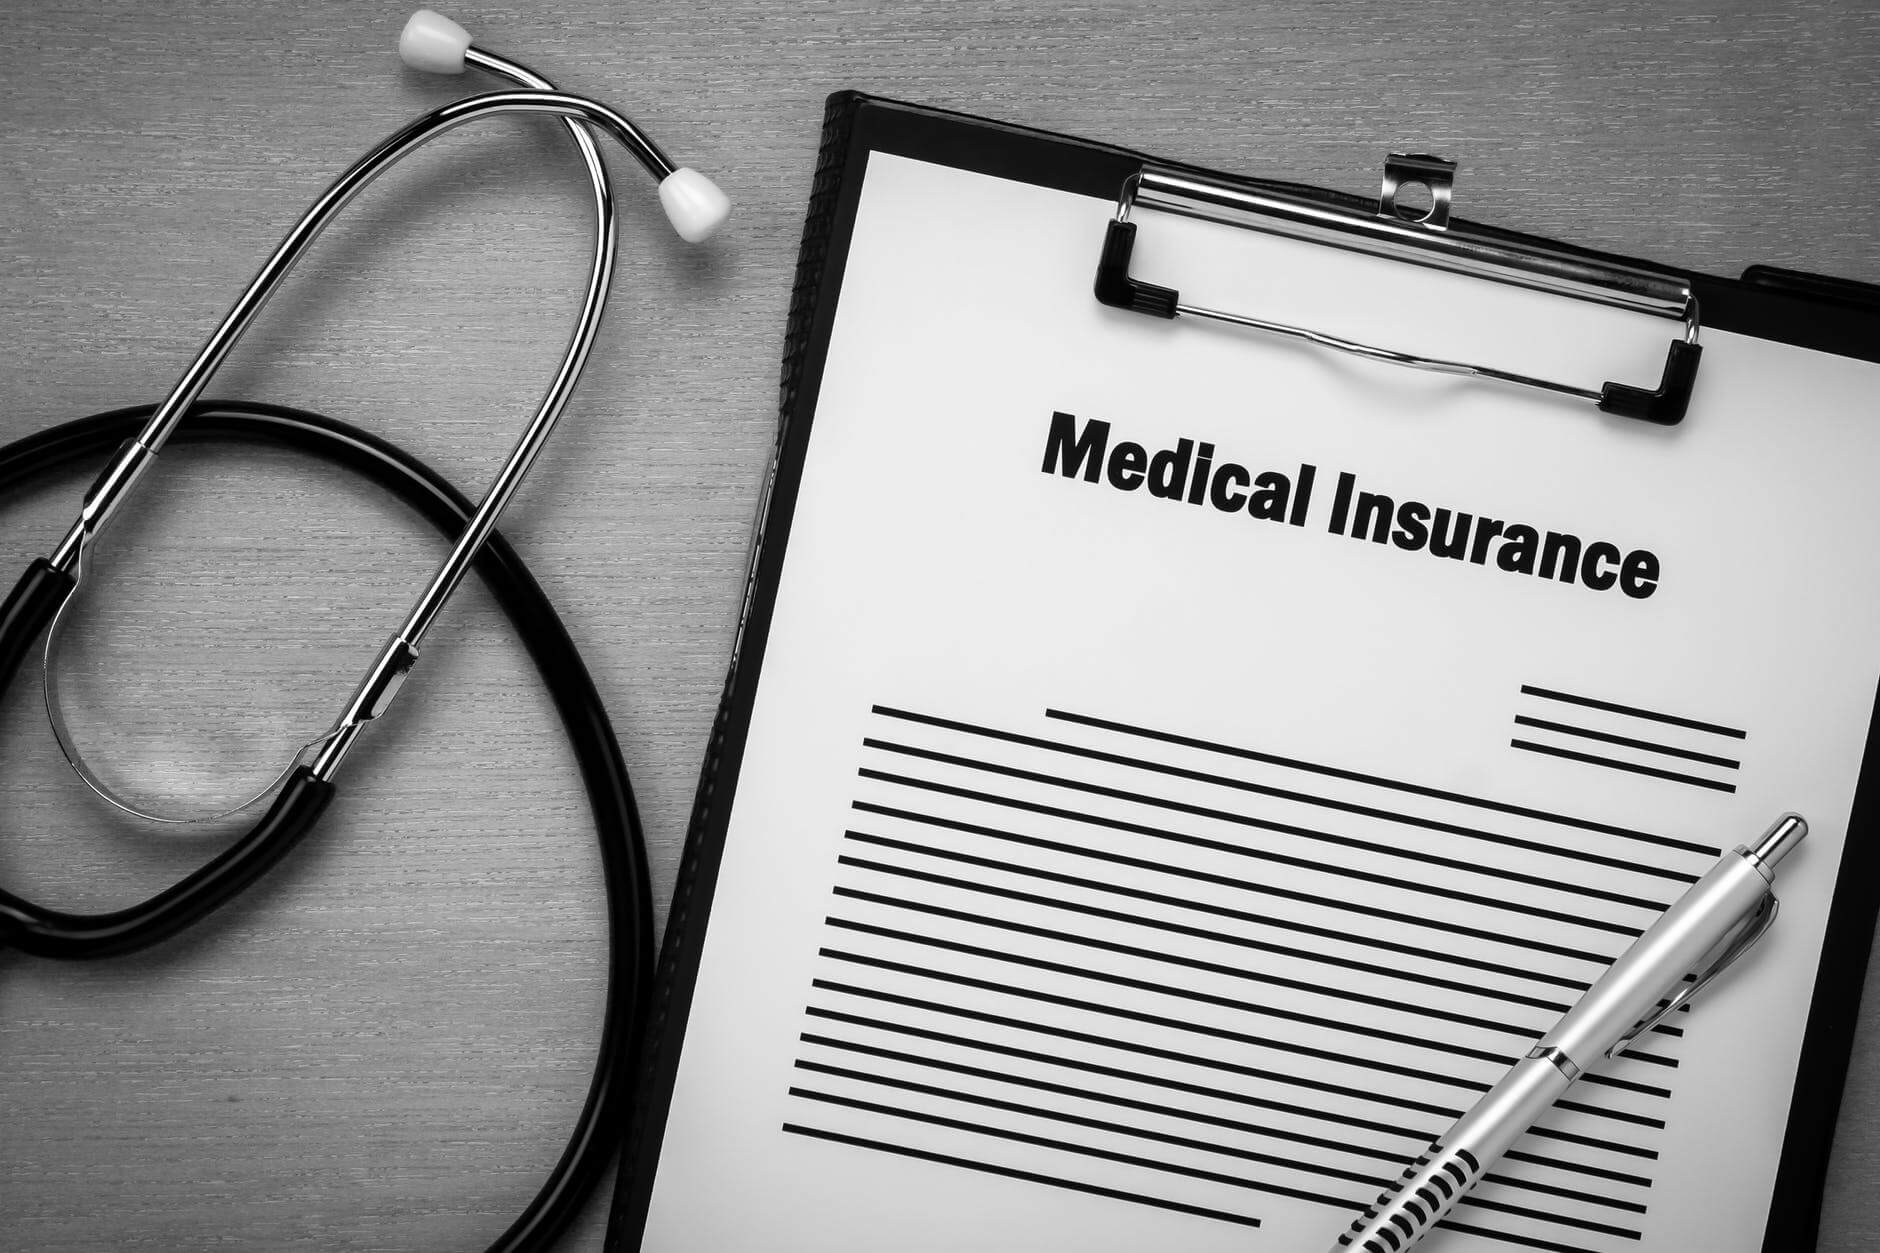 Medcal Insurance